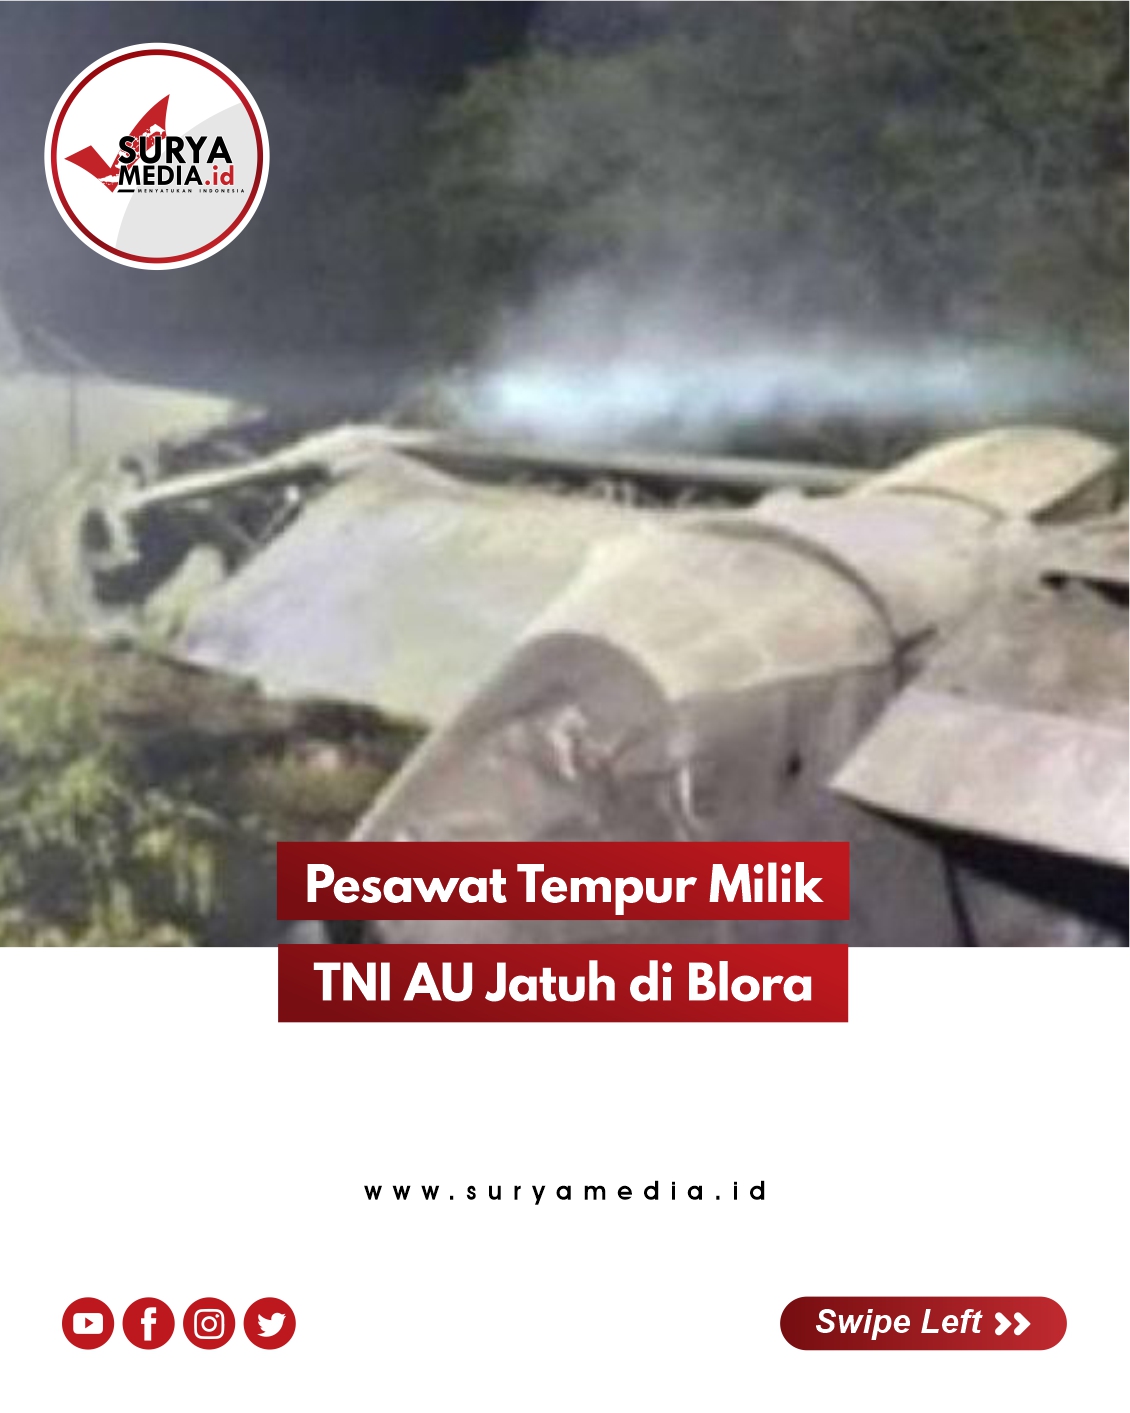 Pesawat Tempur Milik TNI AU Jatuh di Blora